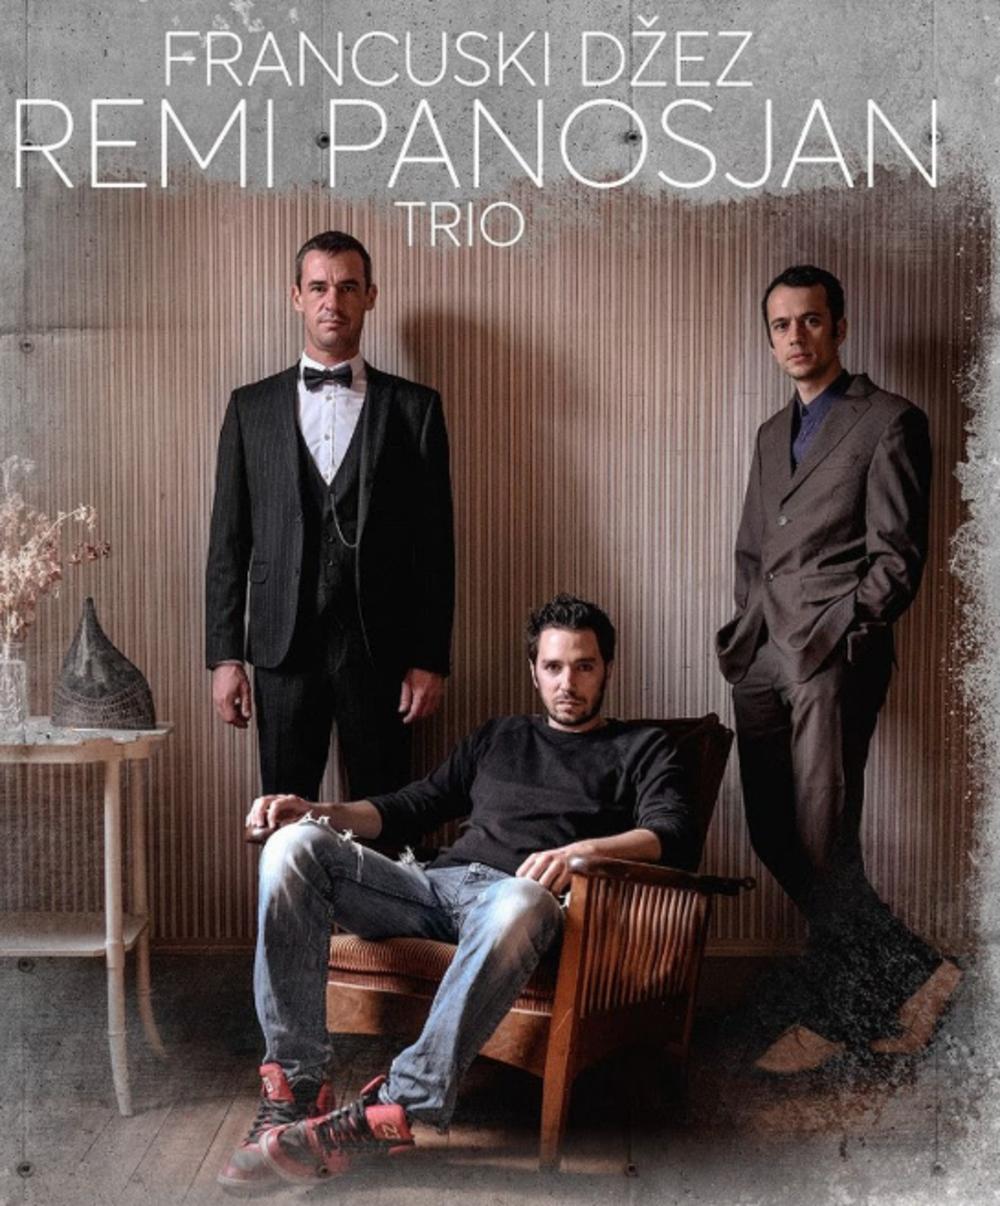 'Remi Panosjan trio